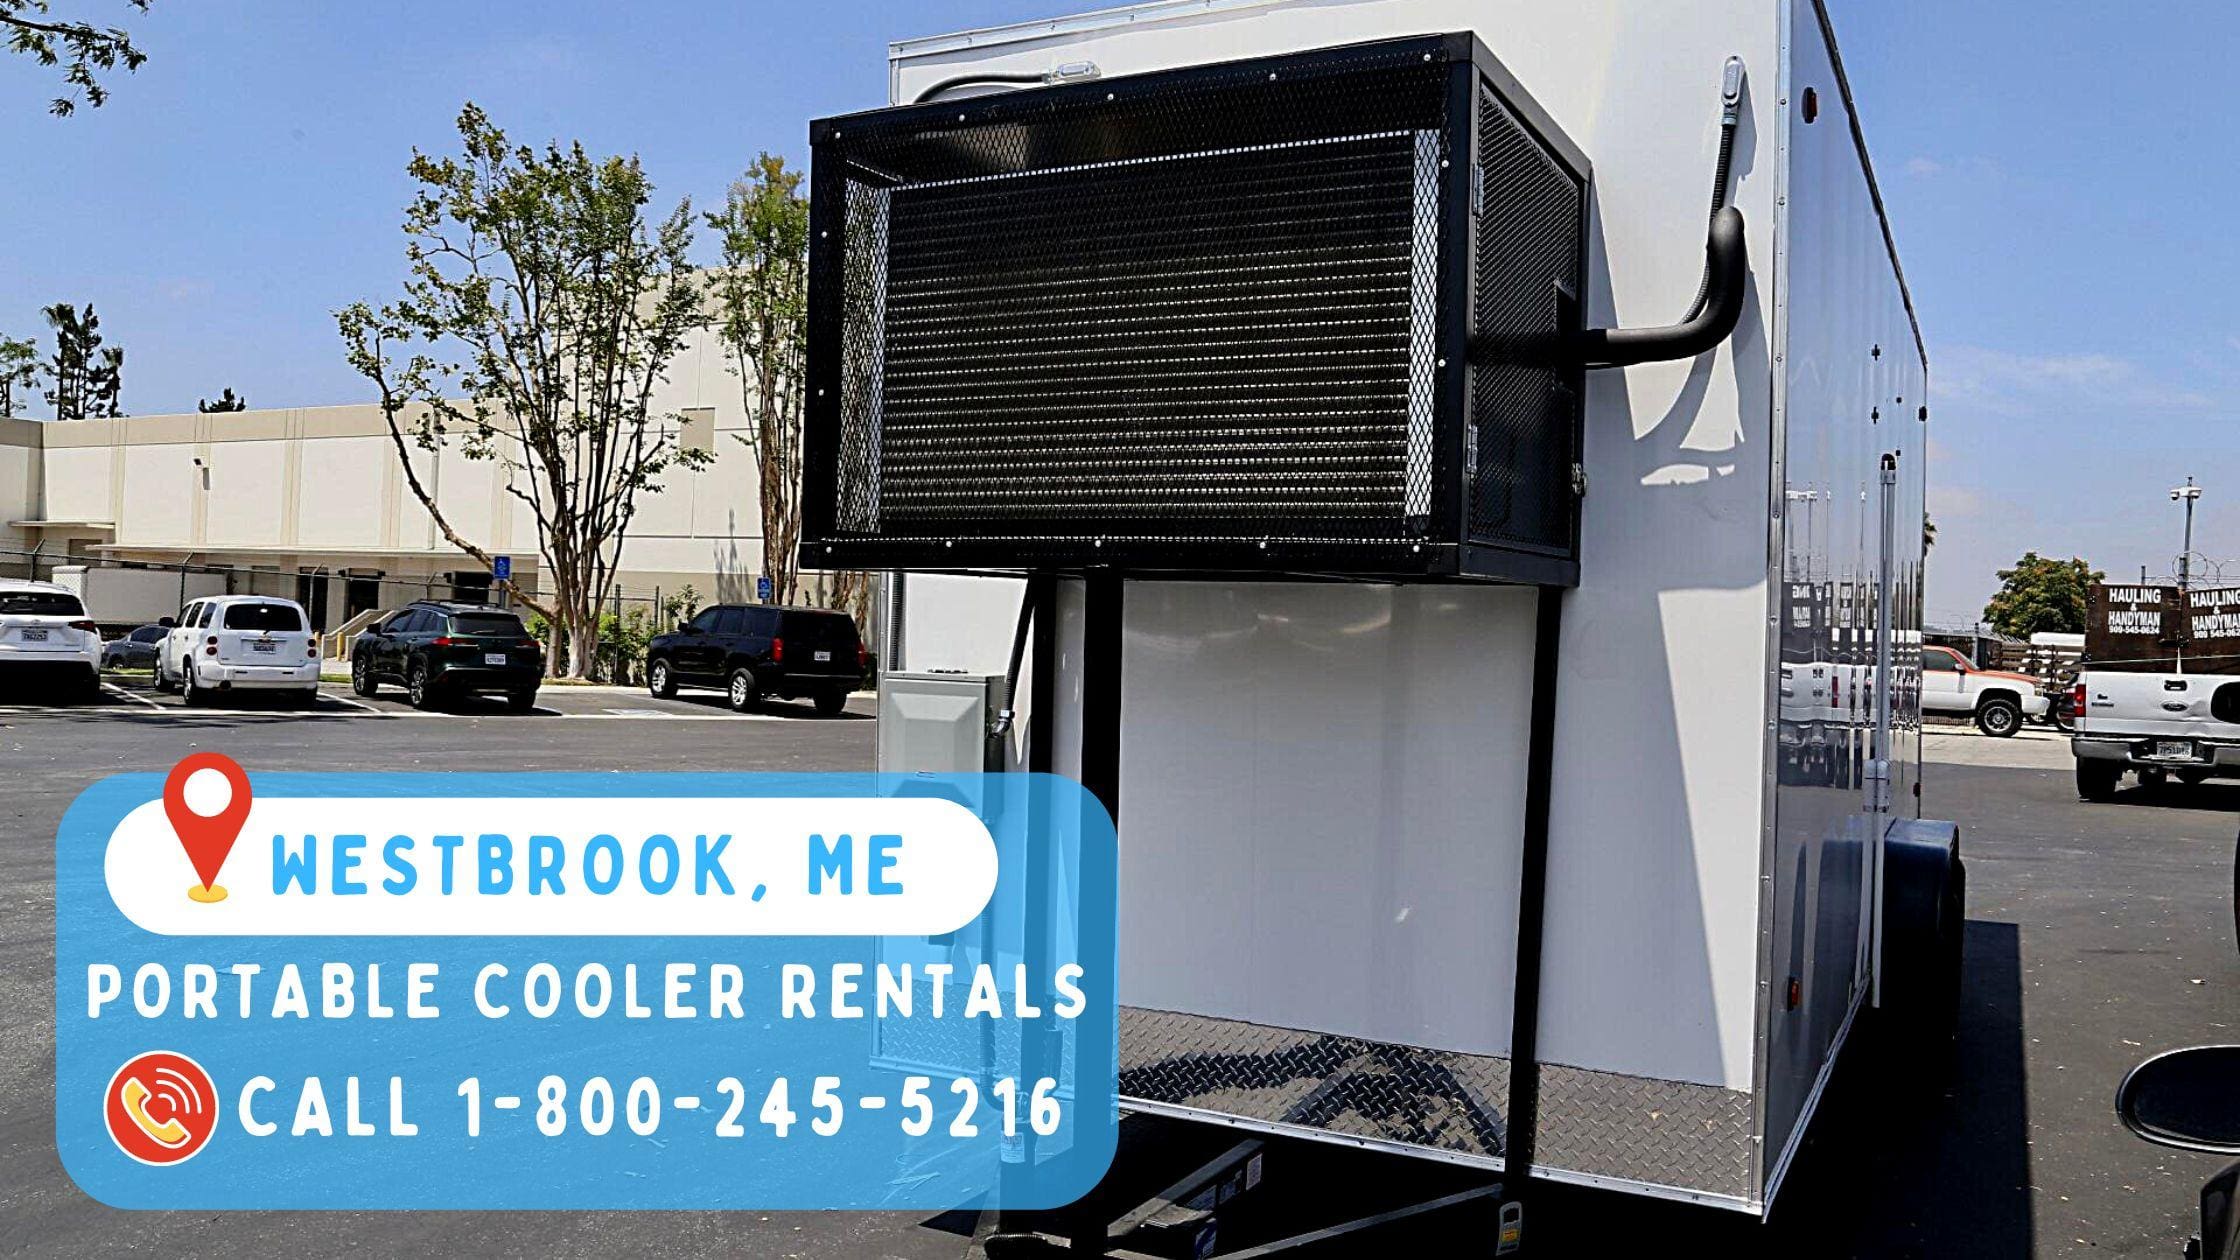 Portable Cooler Rentals in Westbrook, ME